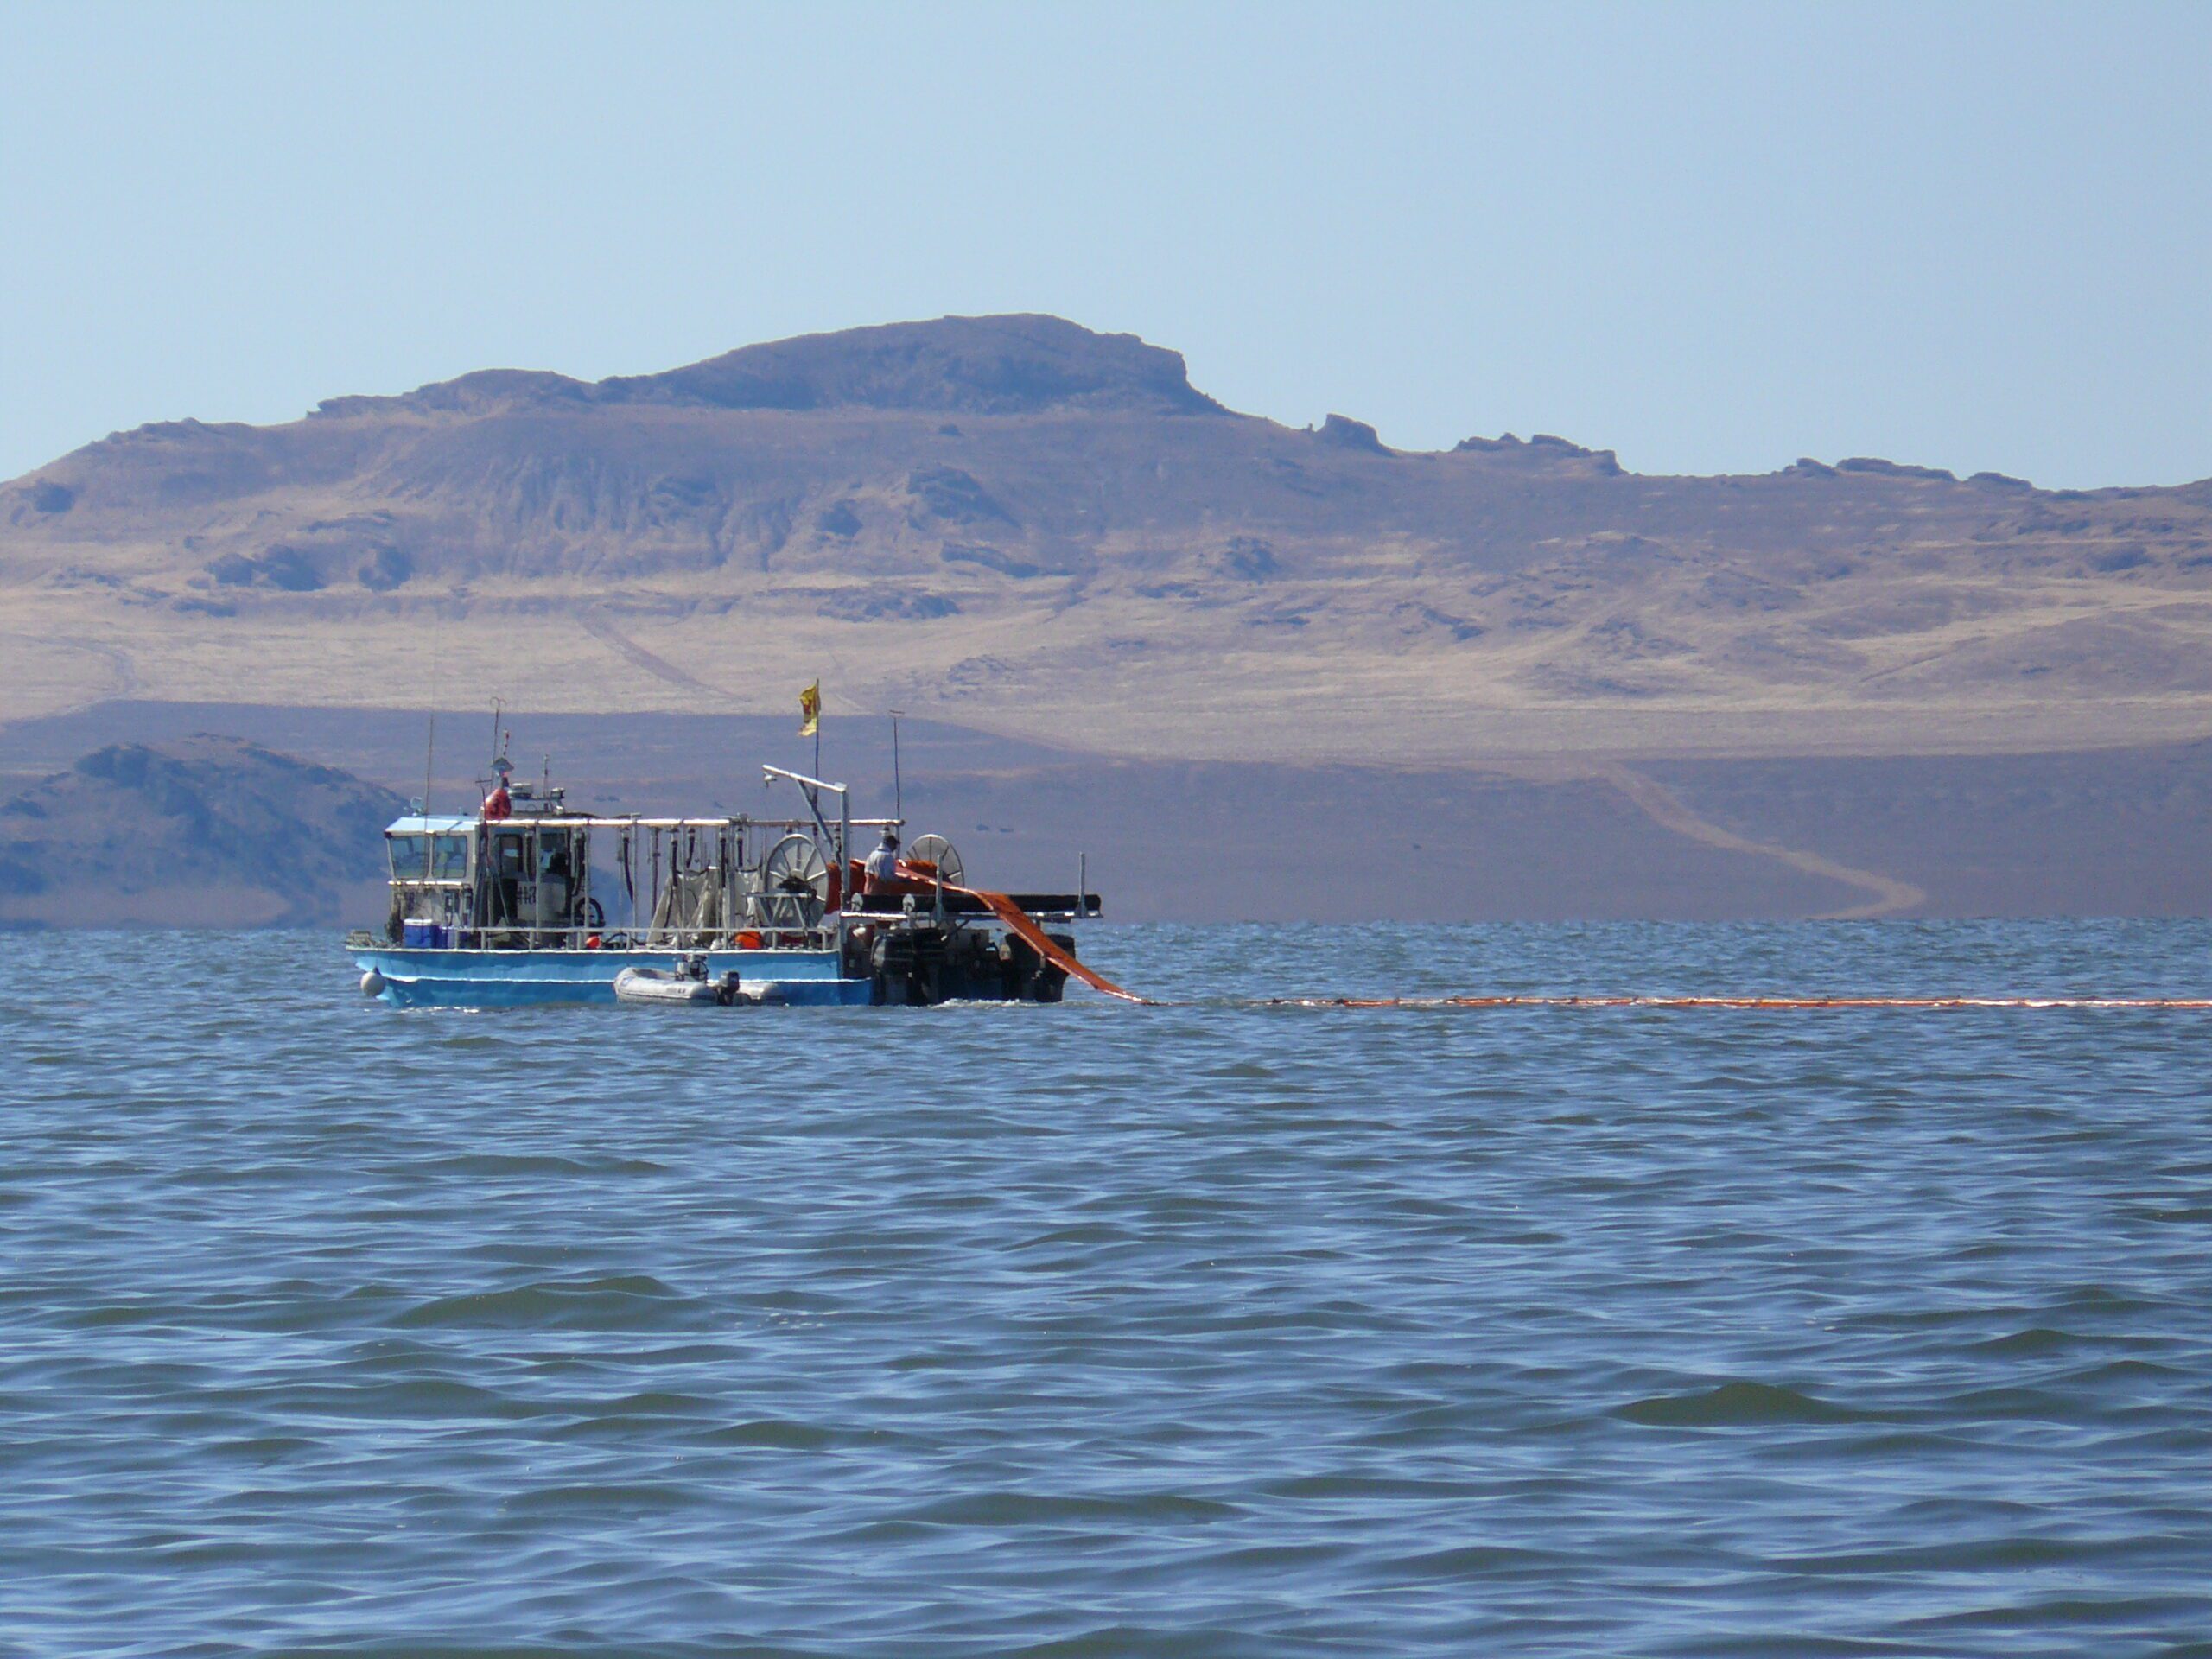 Industry harvesting brine shrimp at the Great Salt Lake.